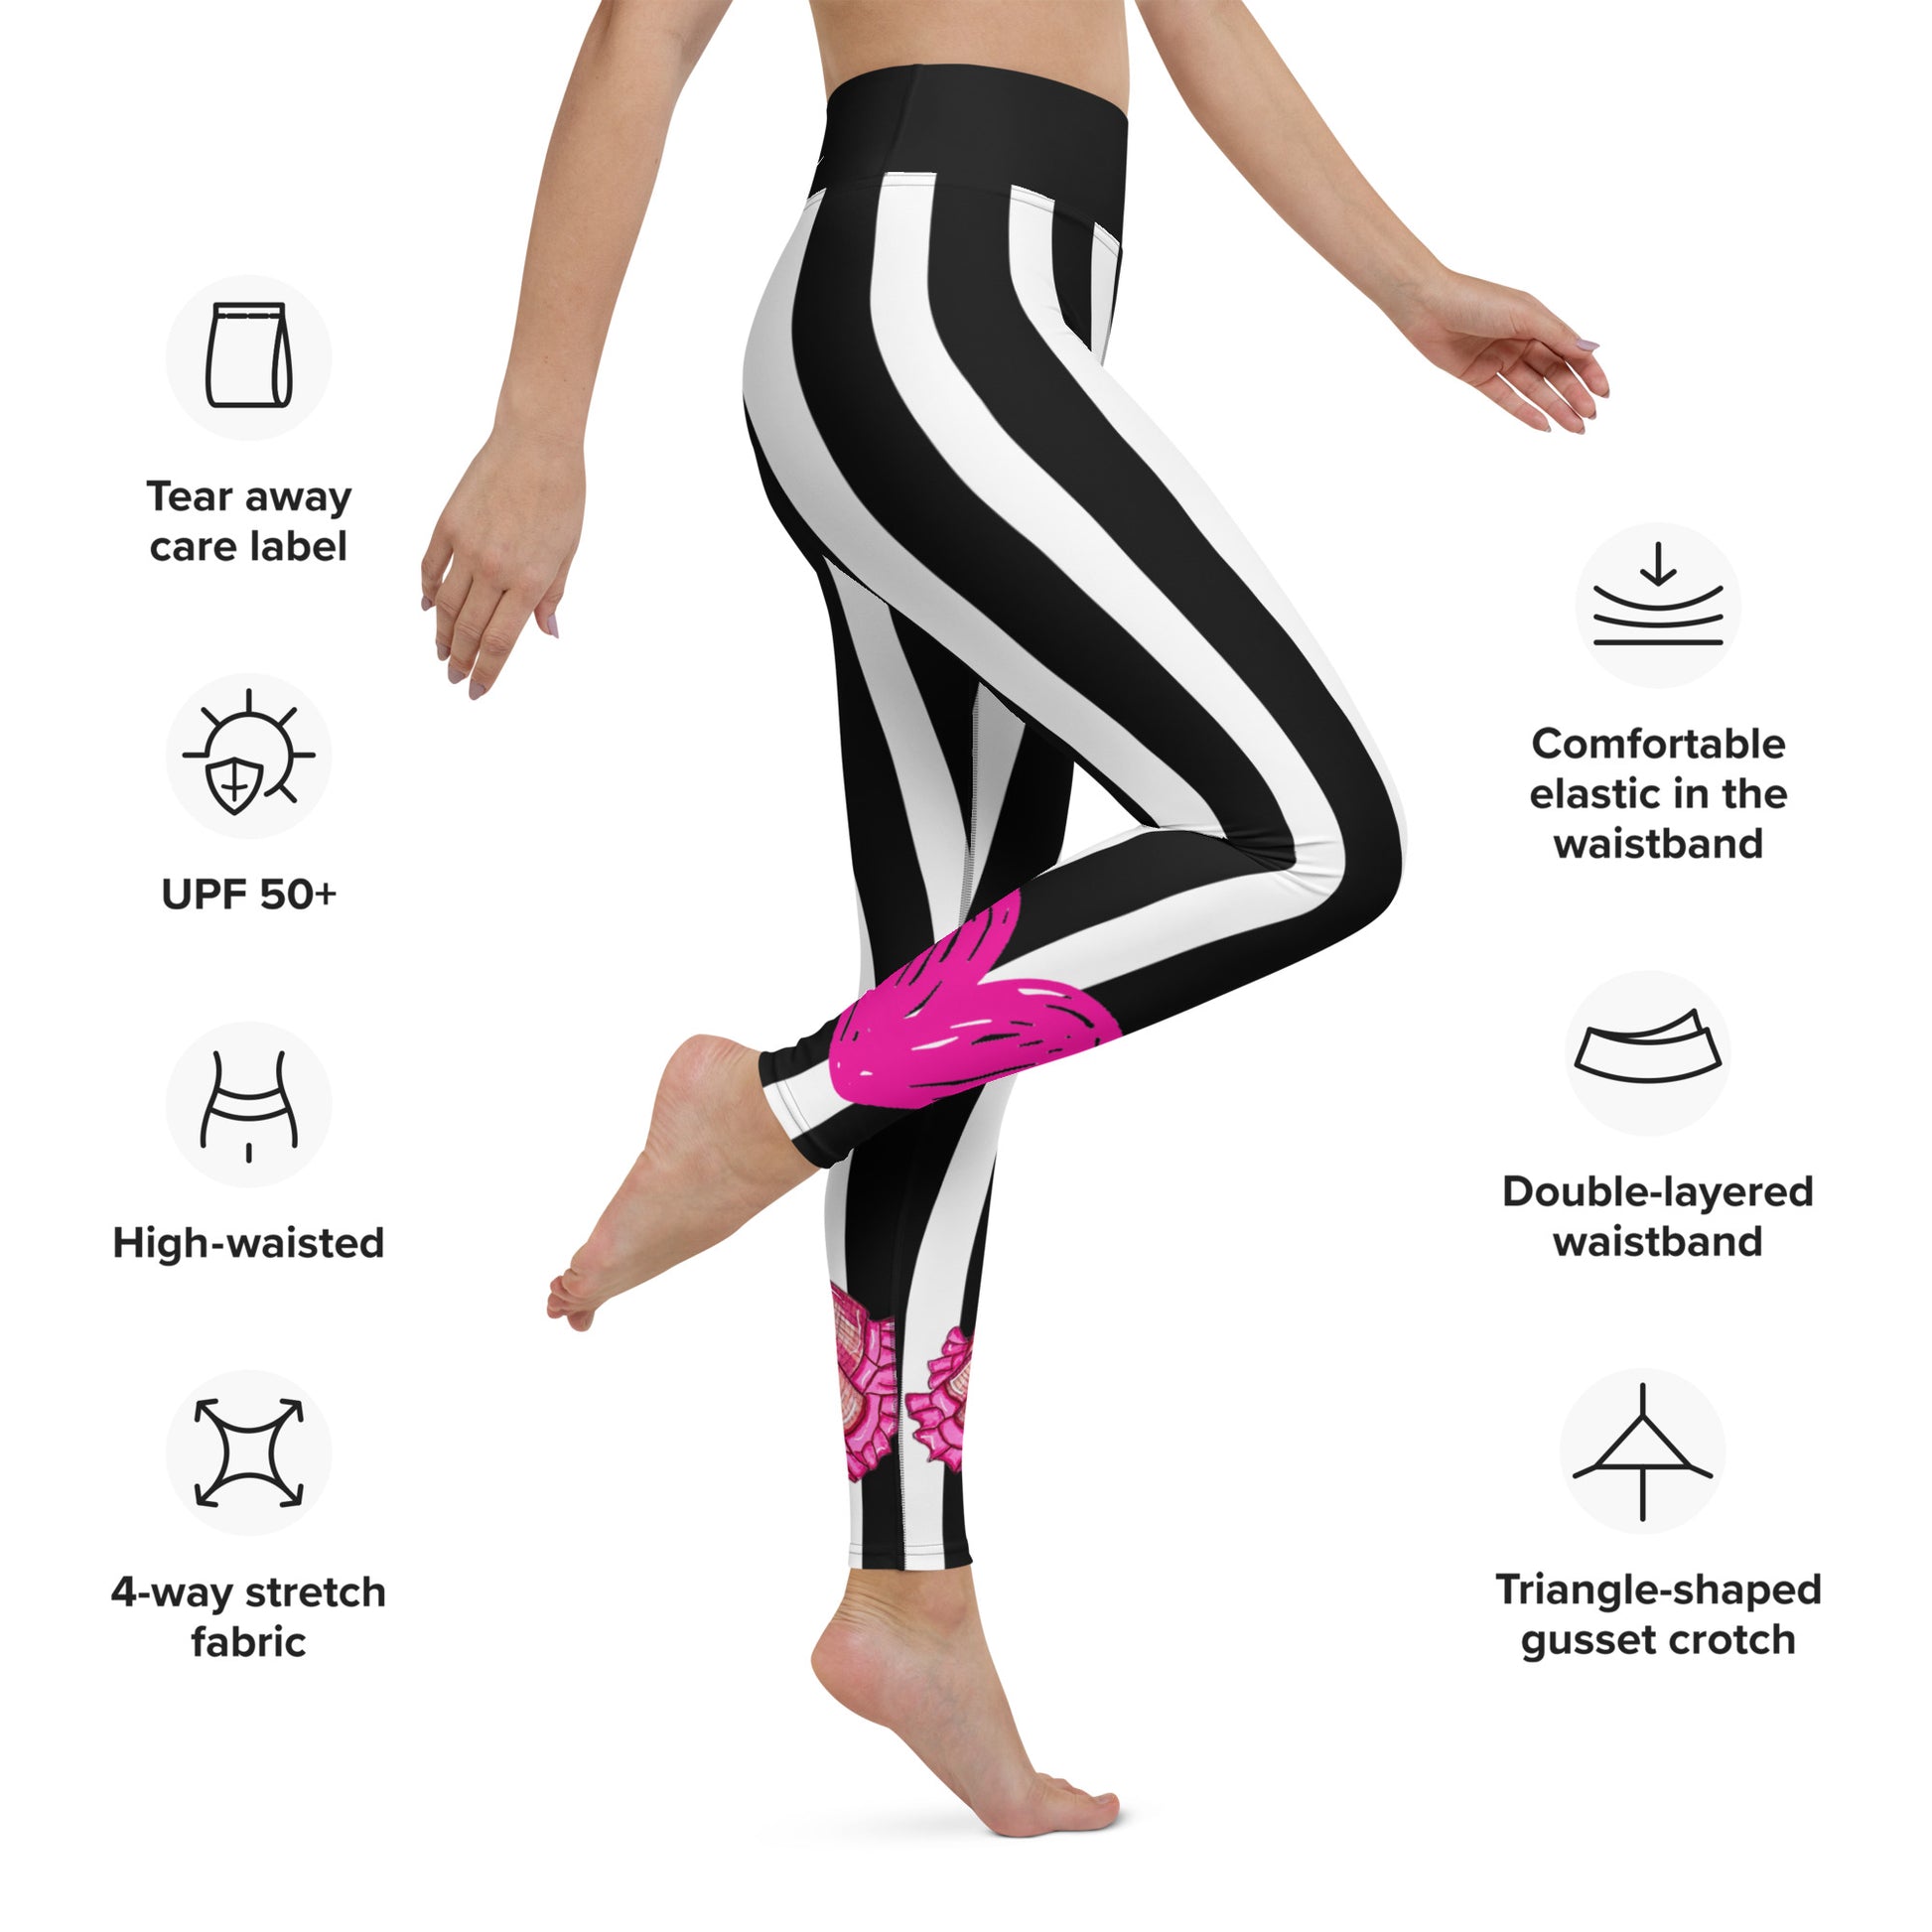 Flamenco Dancer Leggings, black and white striped high waisted yoga leggings with a pink dress design - IllustrArte